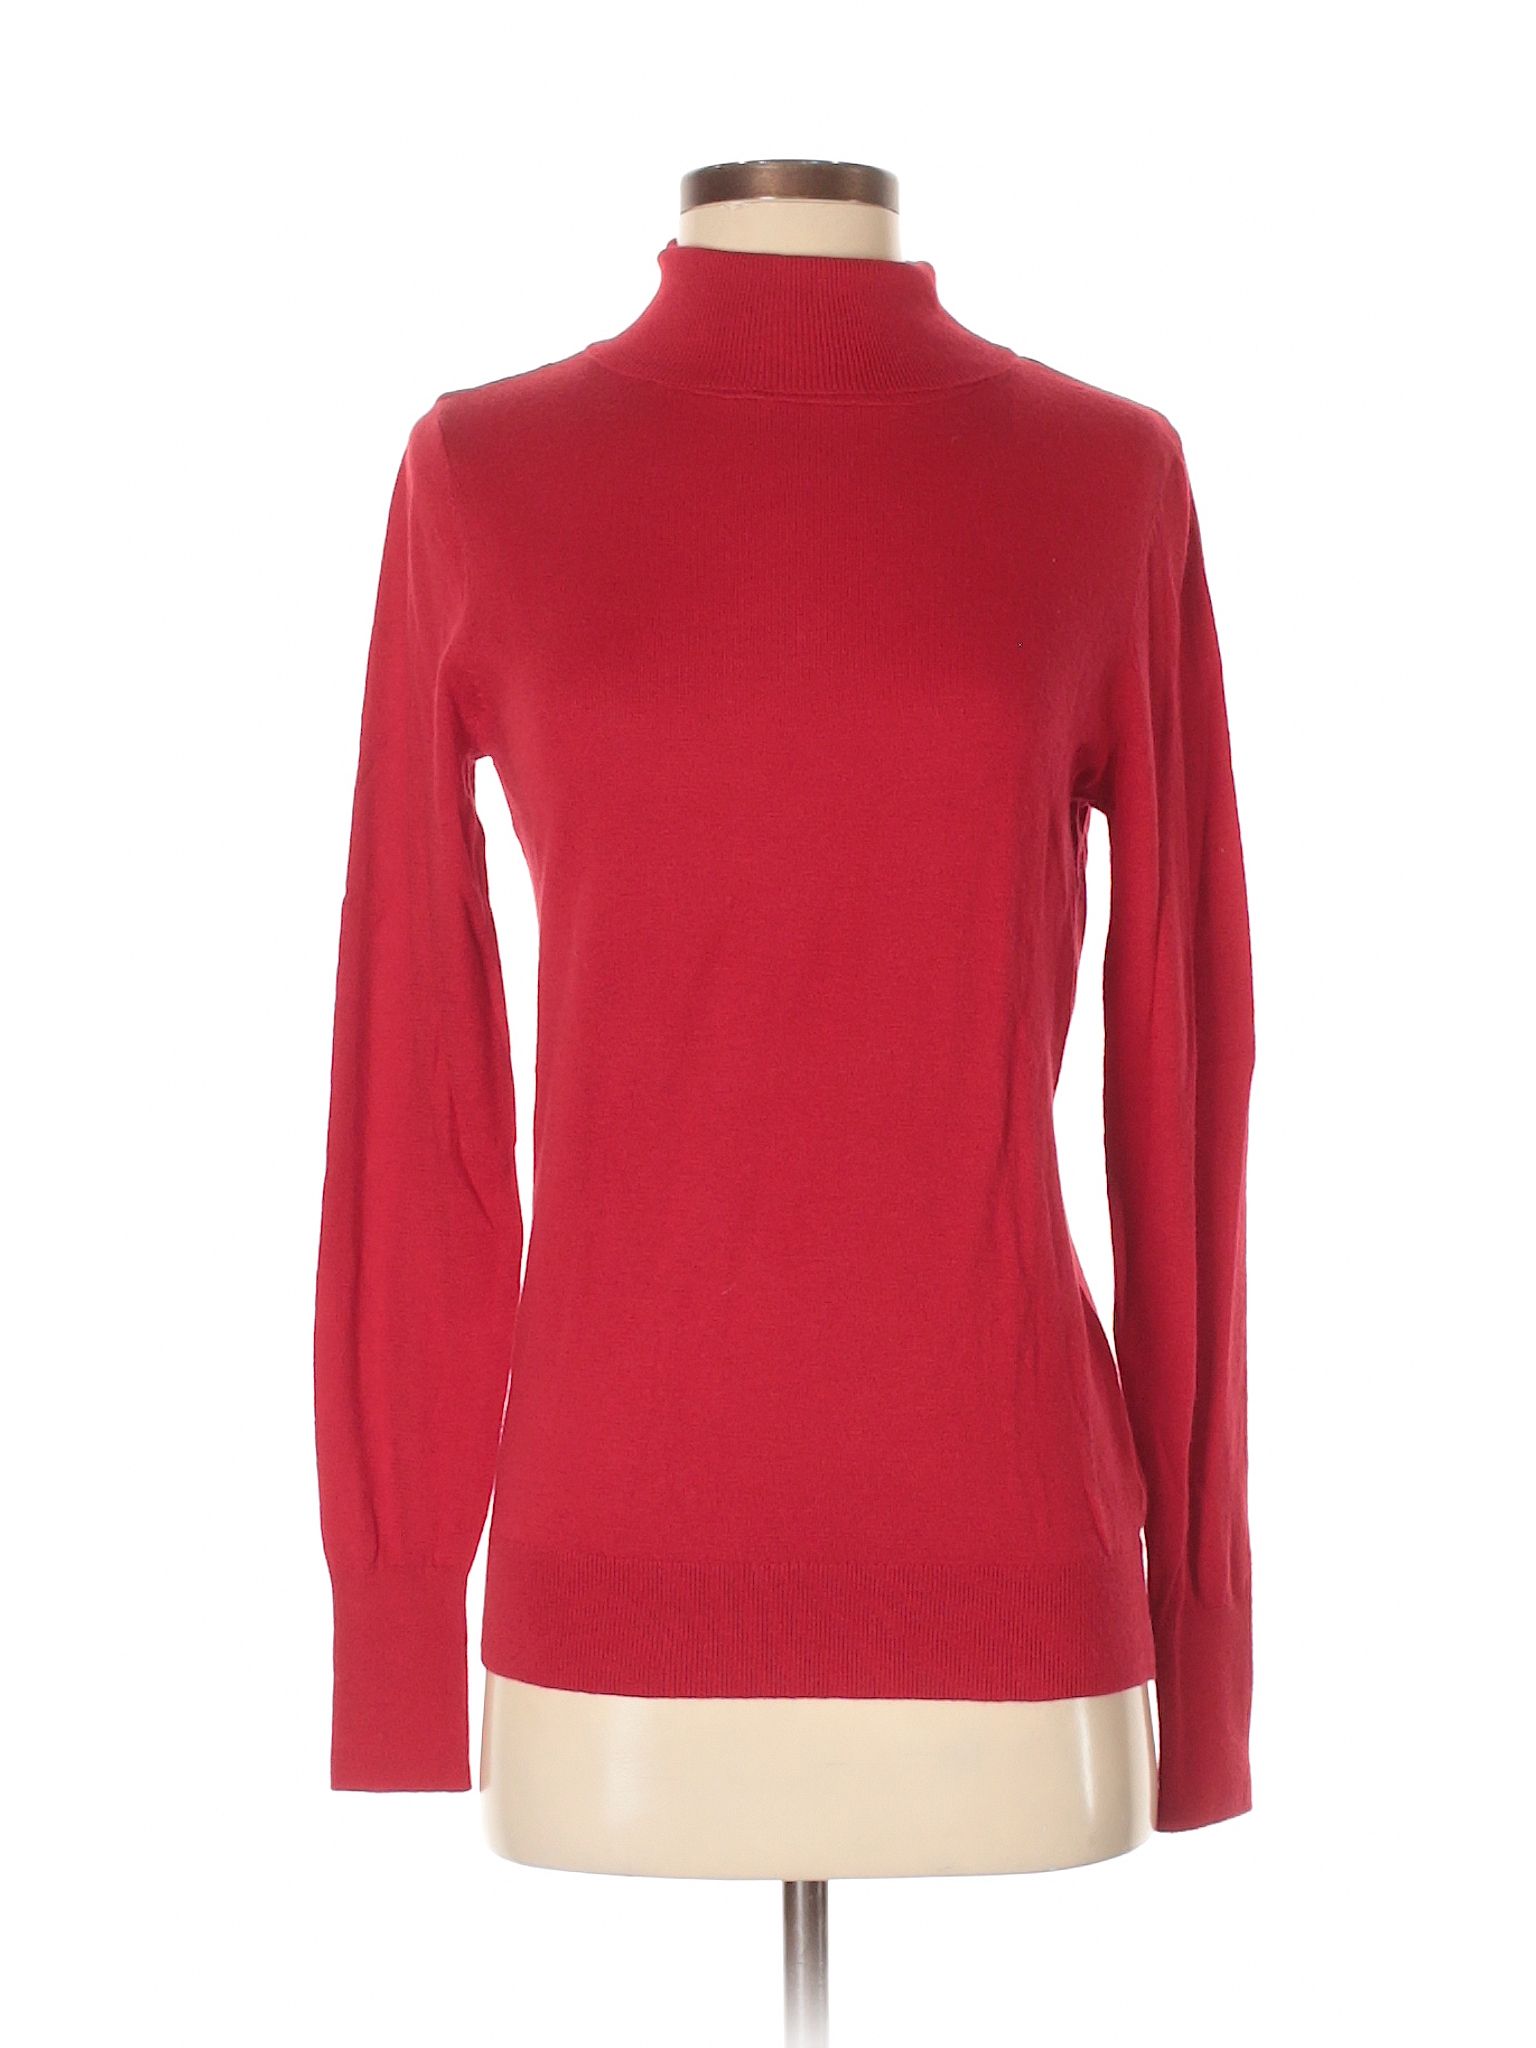 Old Navy Turtleneck Sweater Size 4: Red Women's Tops - 36272011 | thredUP